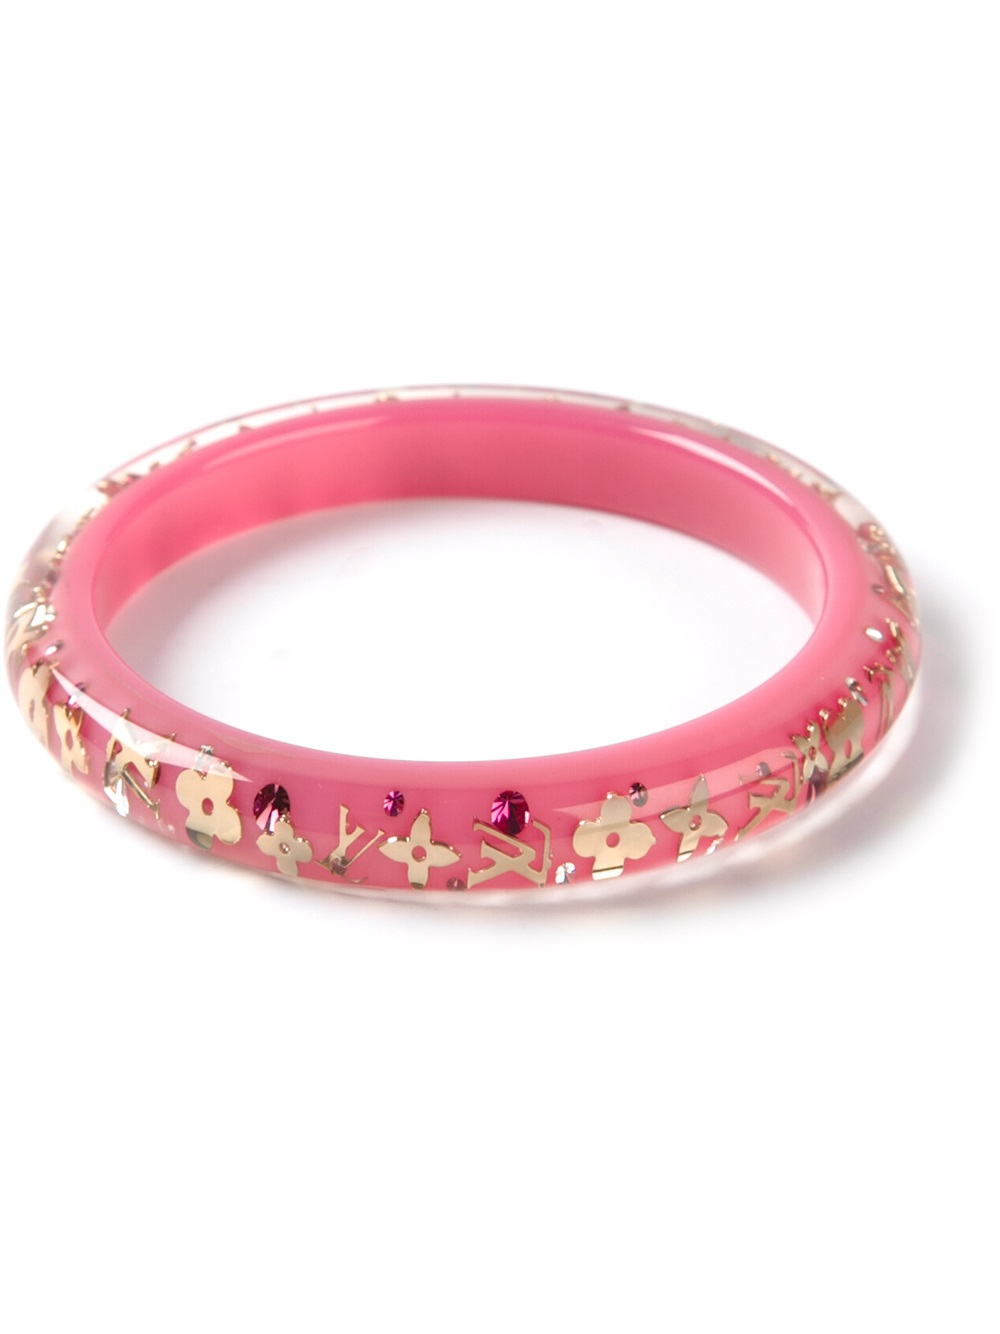 colour Blossom BB Sun Bracelet, Pink gold, Malachite and diamond